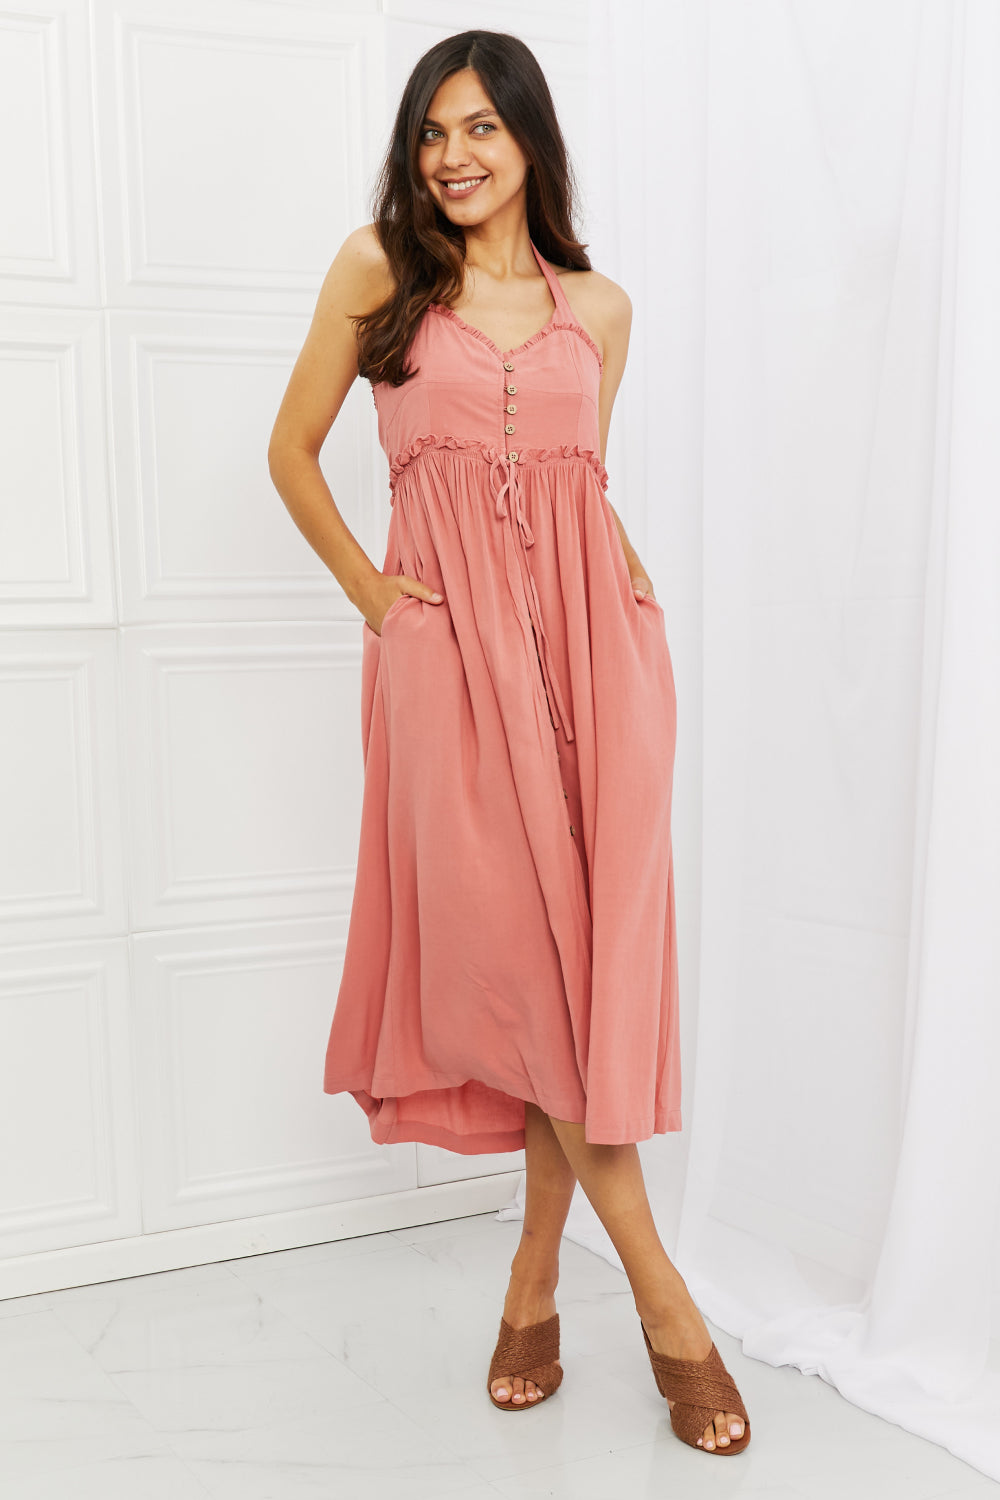 HEYSON Soft & Dainty Midi Dress in French Rose